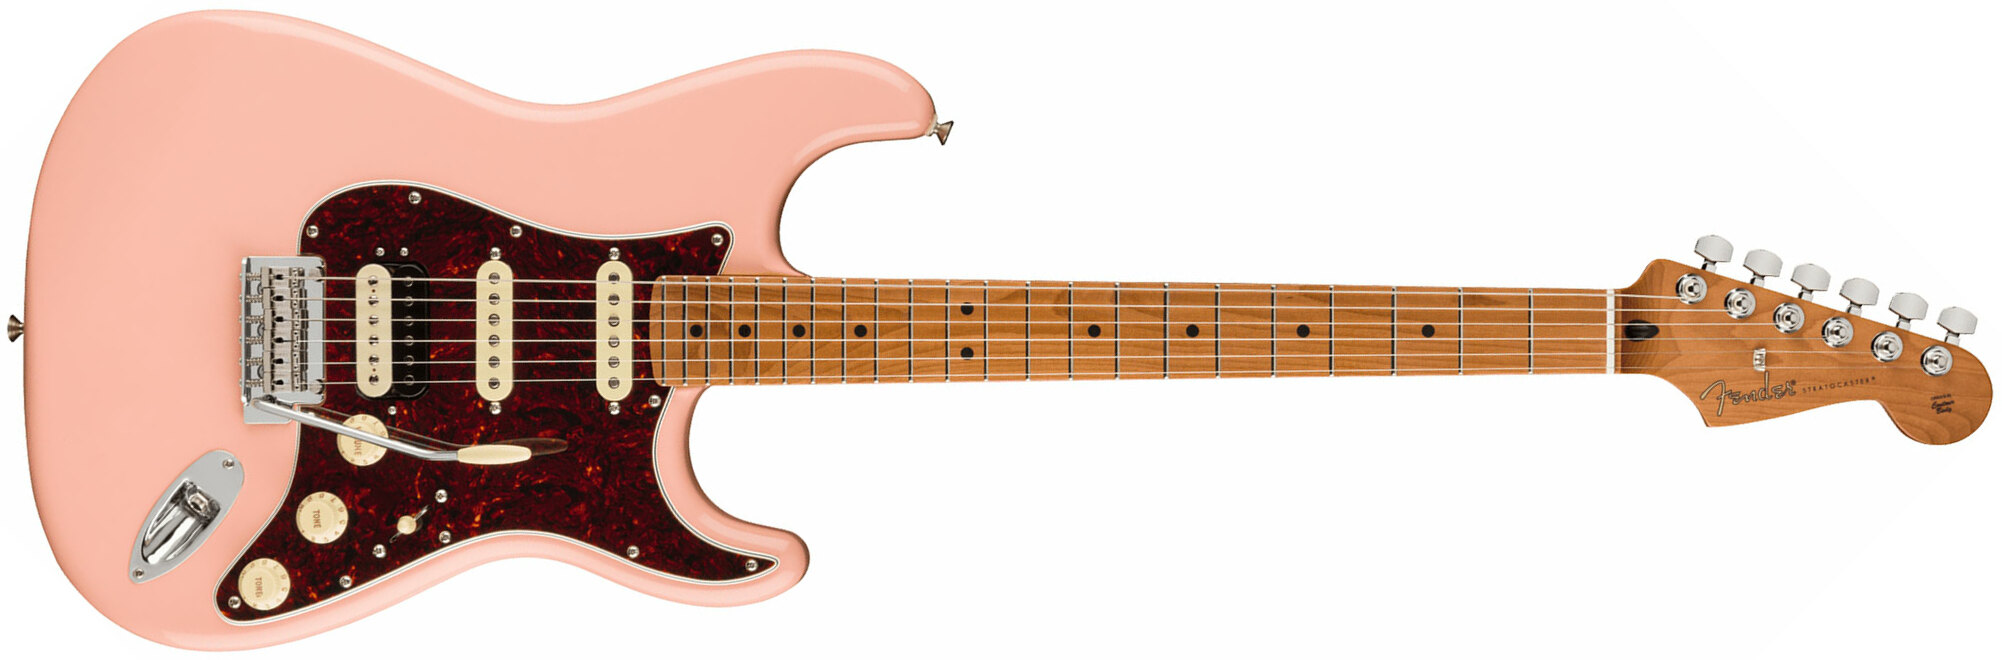 Fender Strat Player Roasted Neck Ltd Mex Hss Trem Mn - Shell Pink - Str shape electric guitar - Main picture